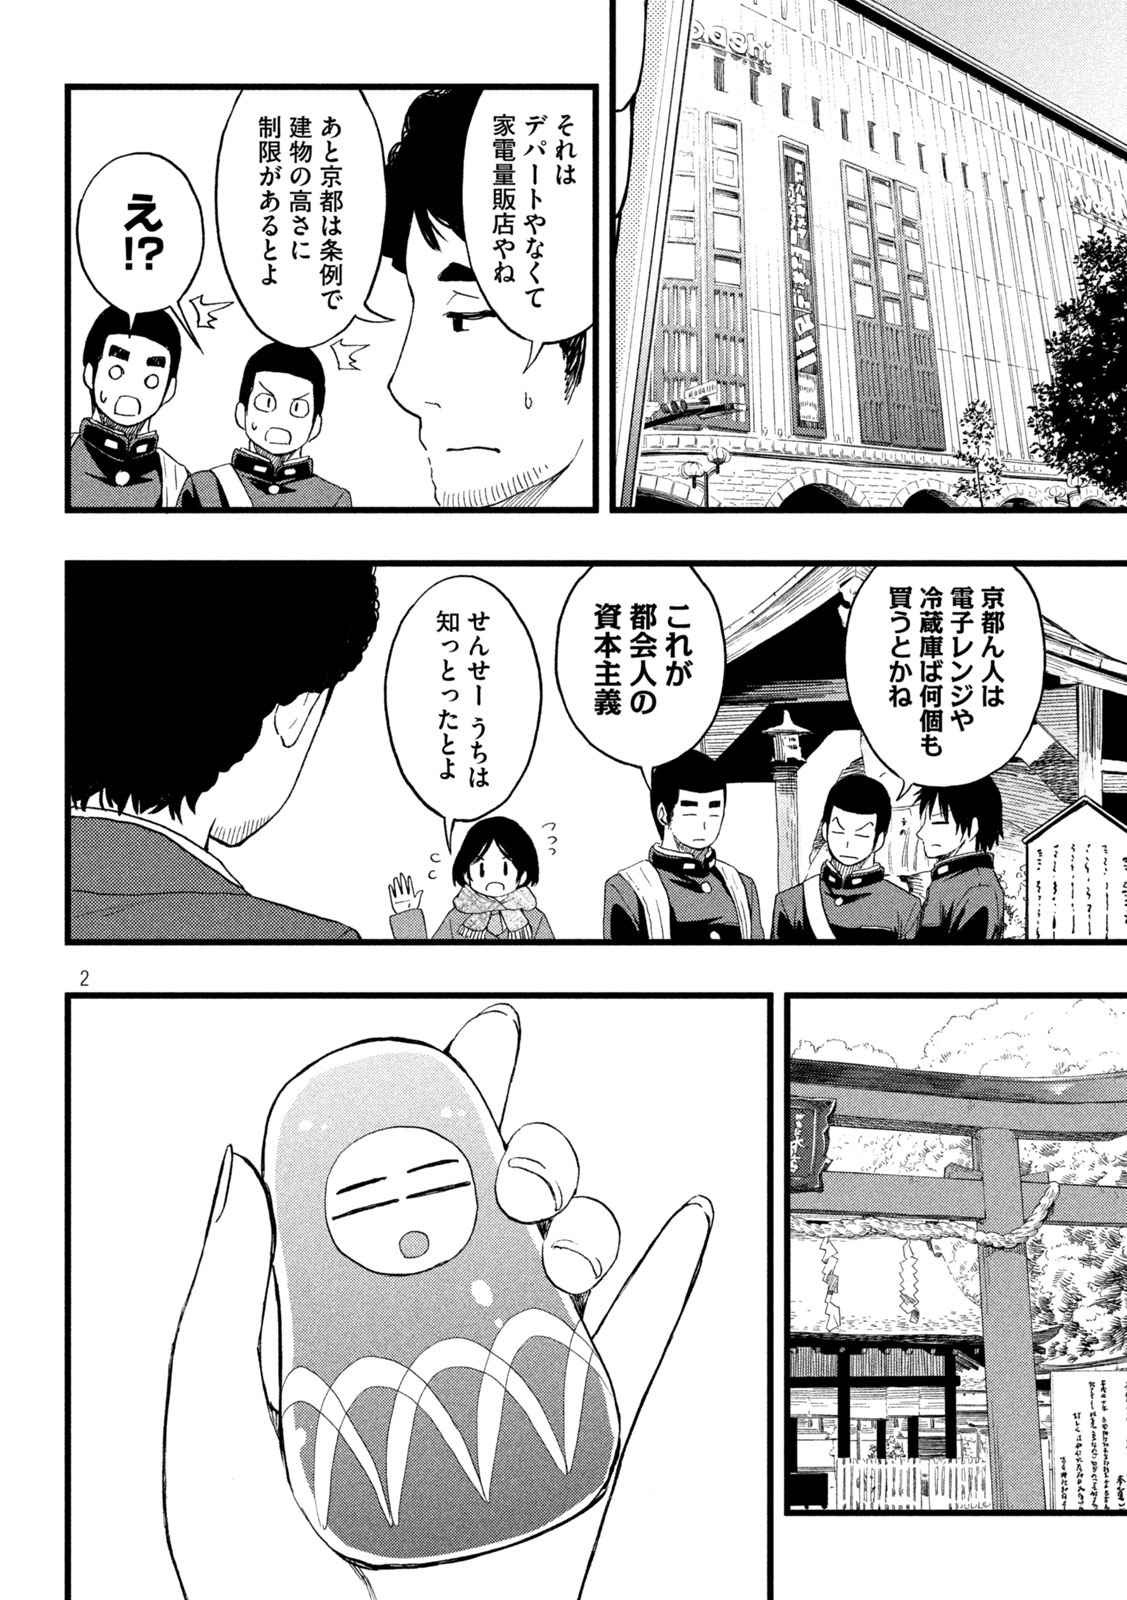 Koharu haru! - Chapter 65 - Page 2